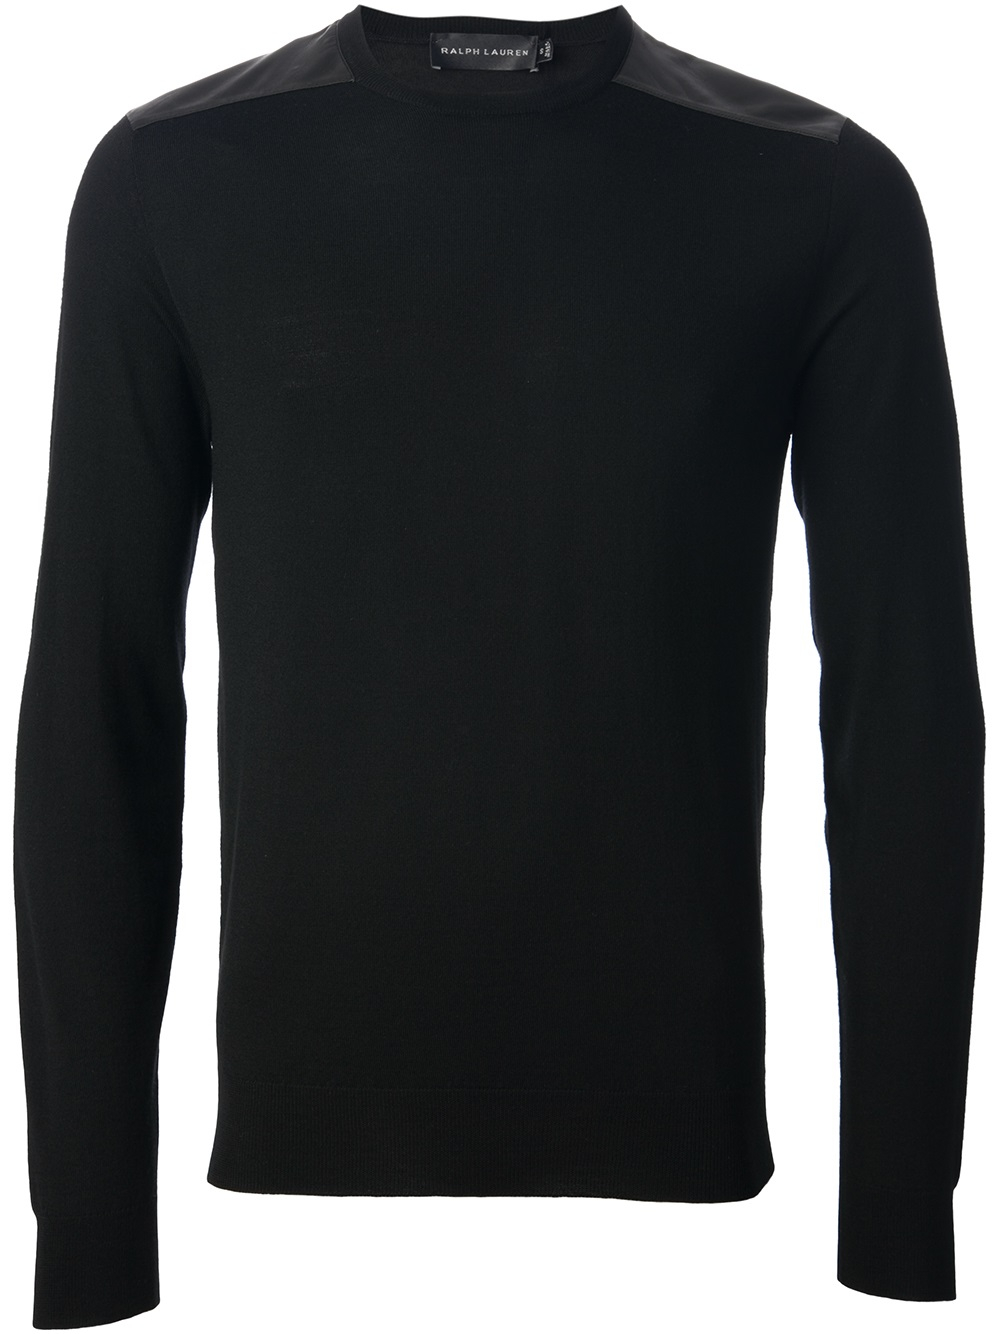 Ralph Lauren Black Label Shoulder Pads Sweater in Black for Men